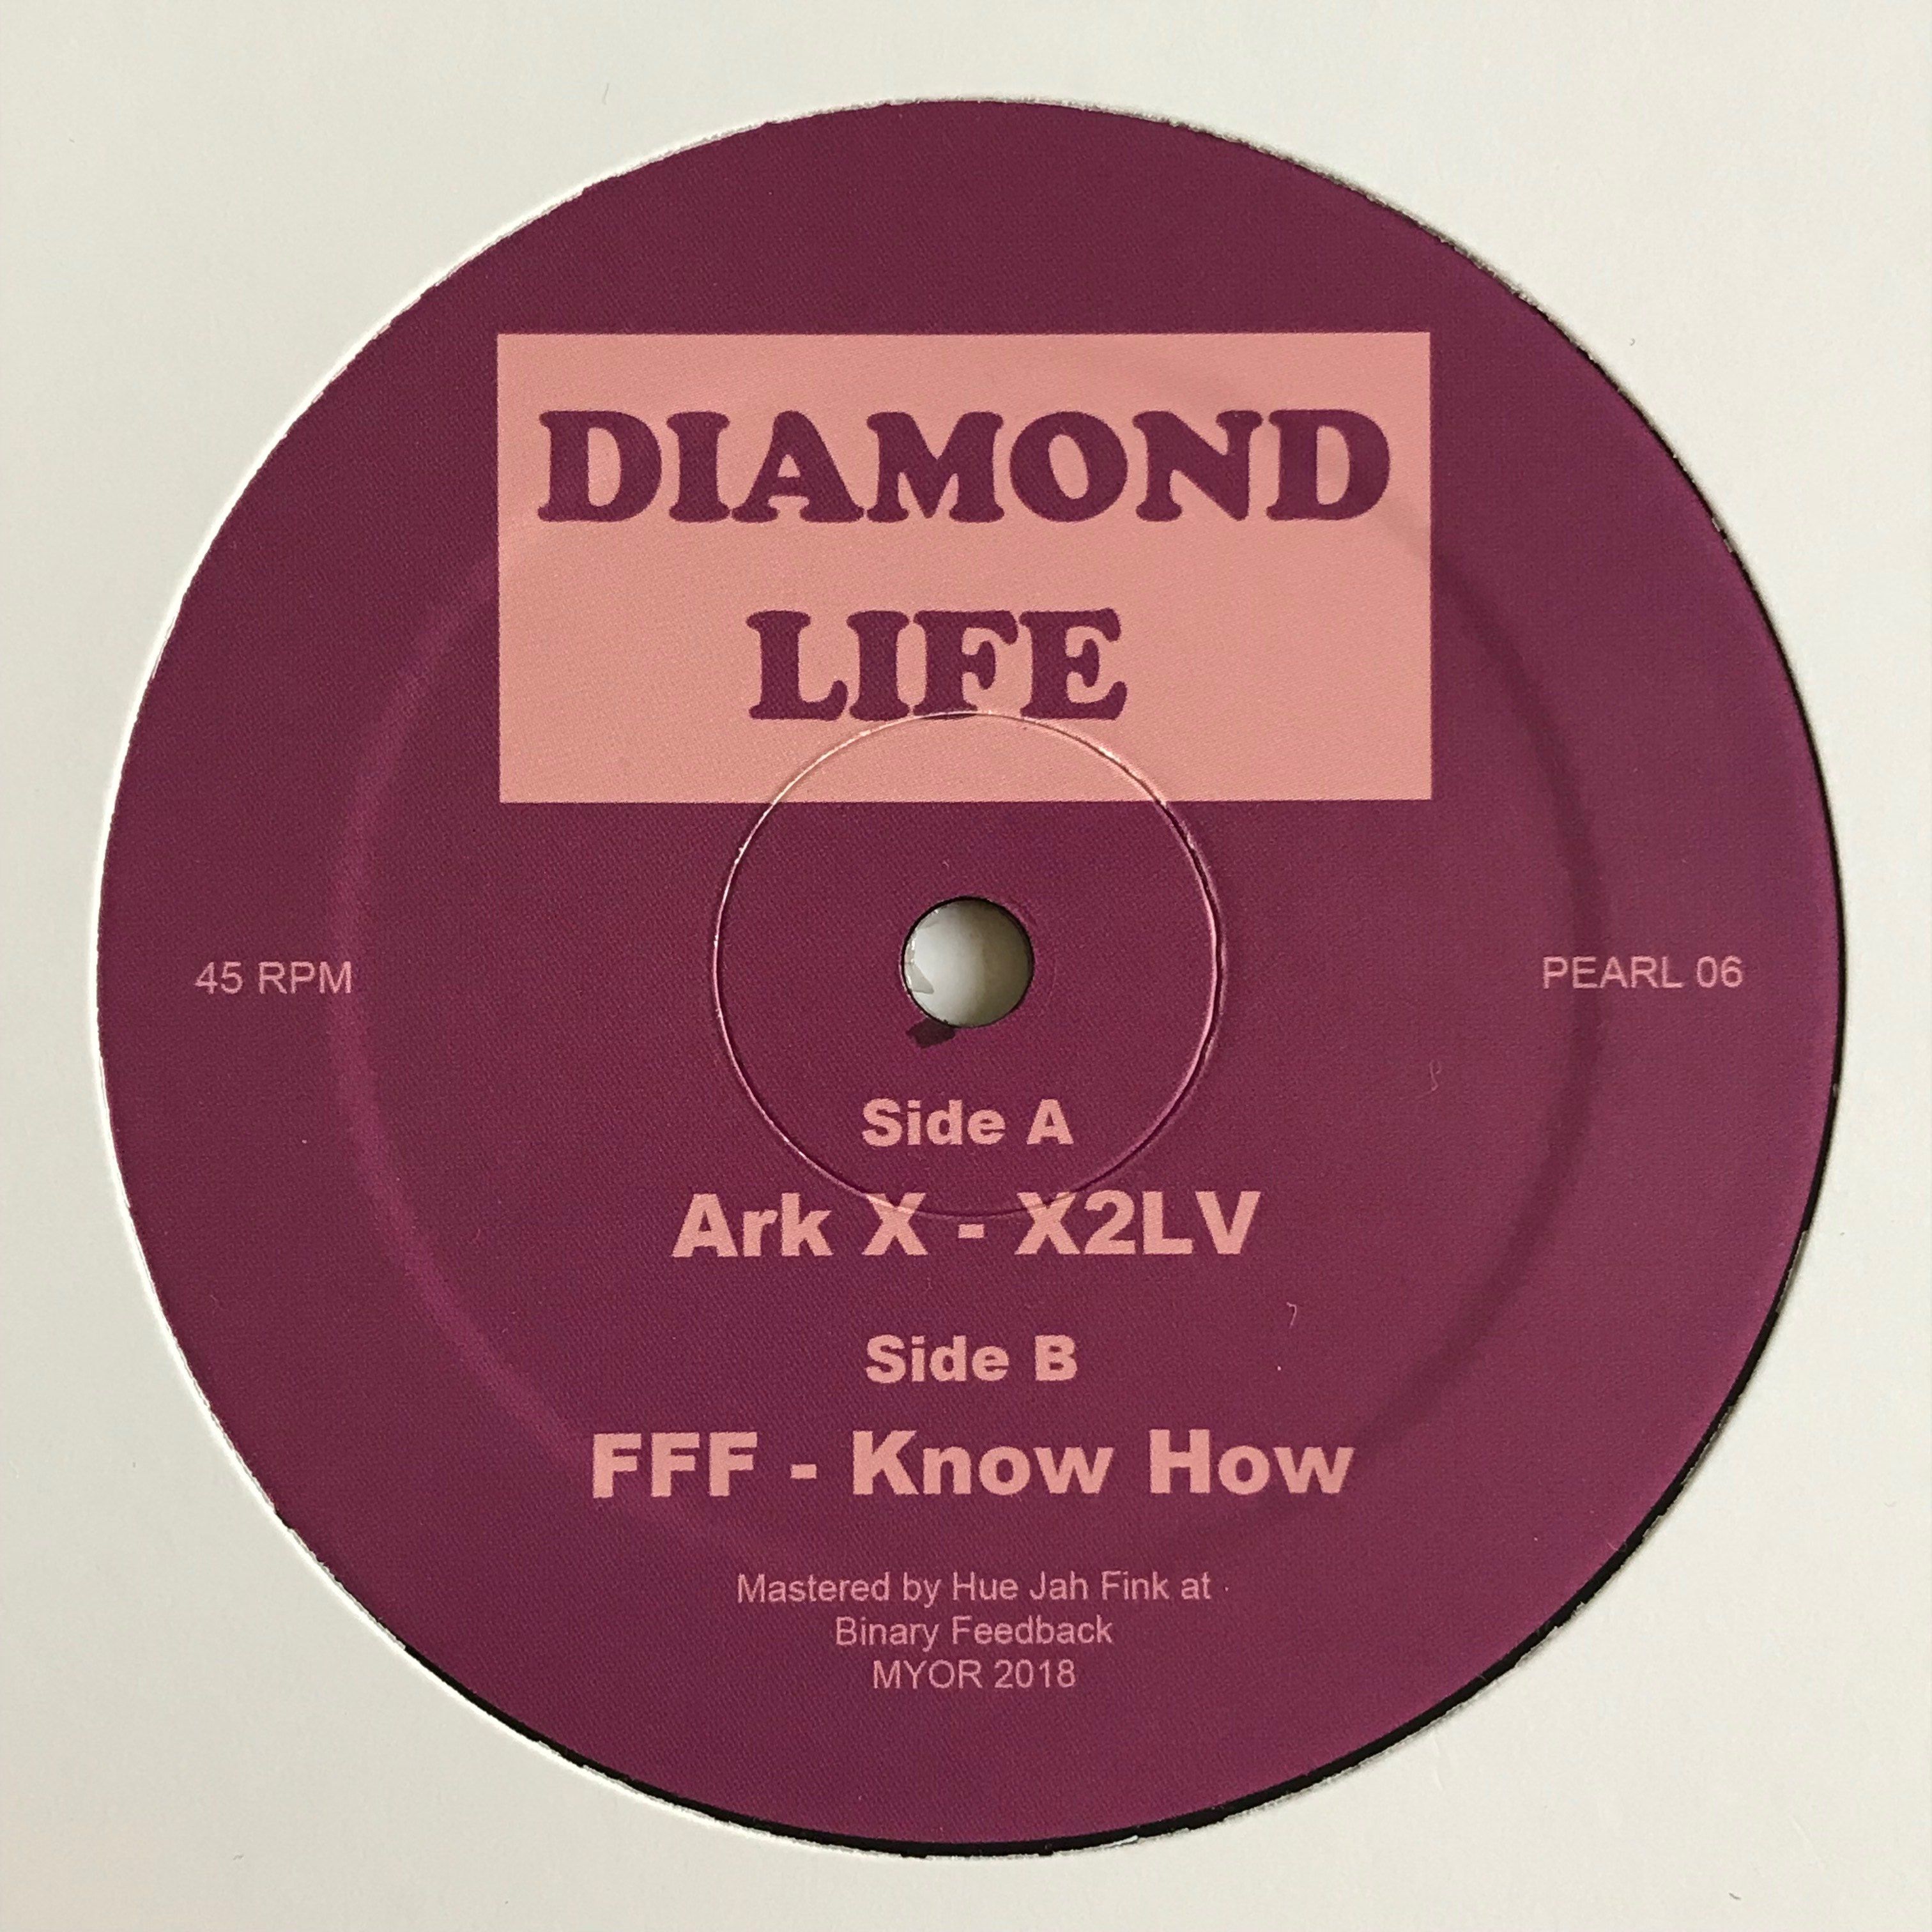 Ark X/FFF - Diamond Life 06 - PEARL06 - DIAMOND LIFE